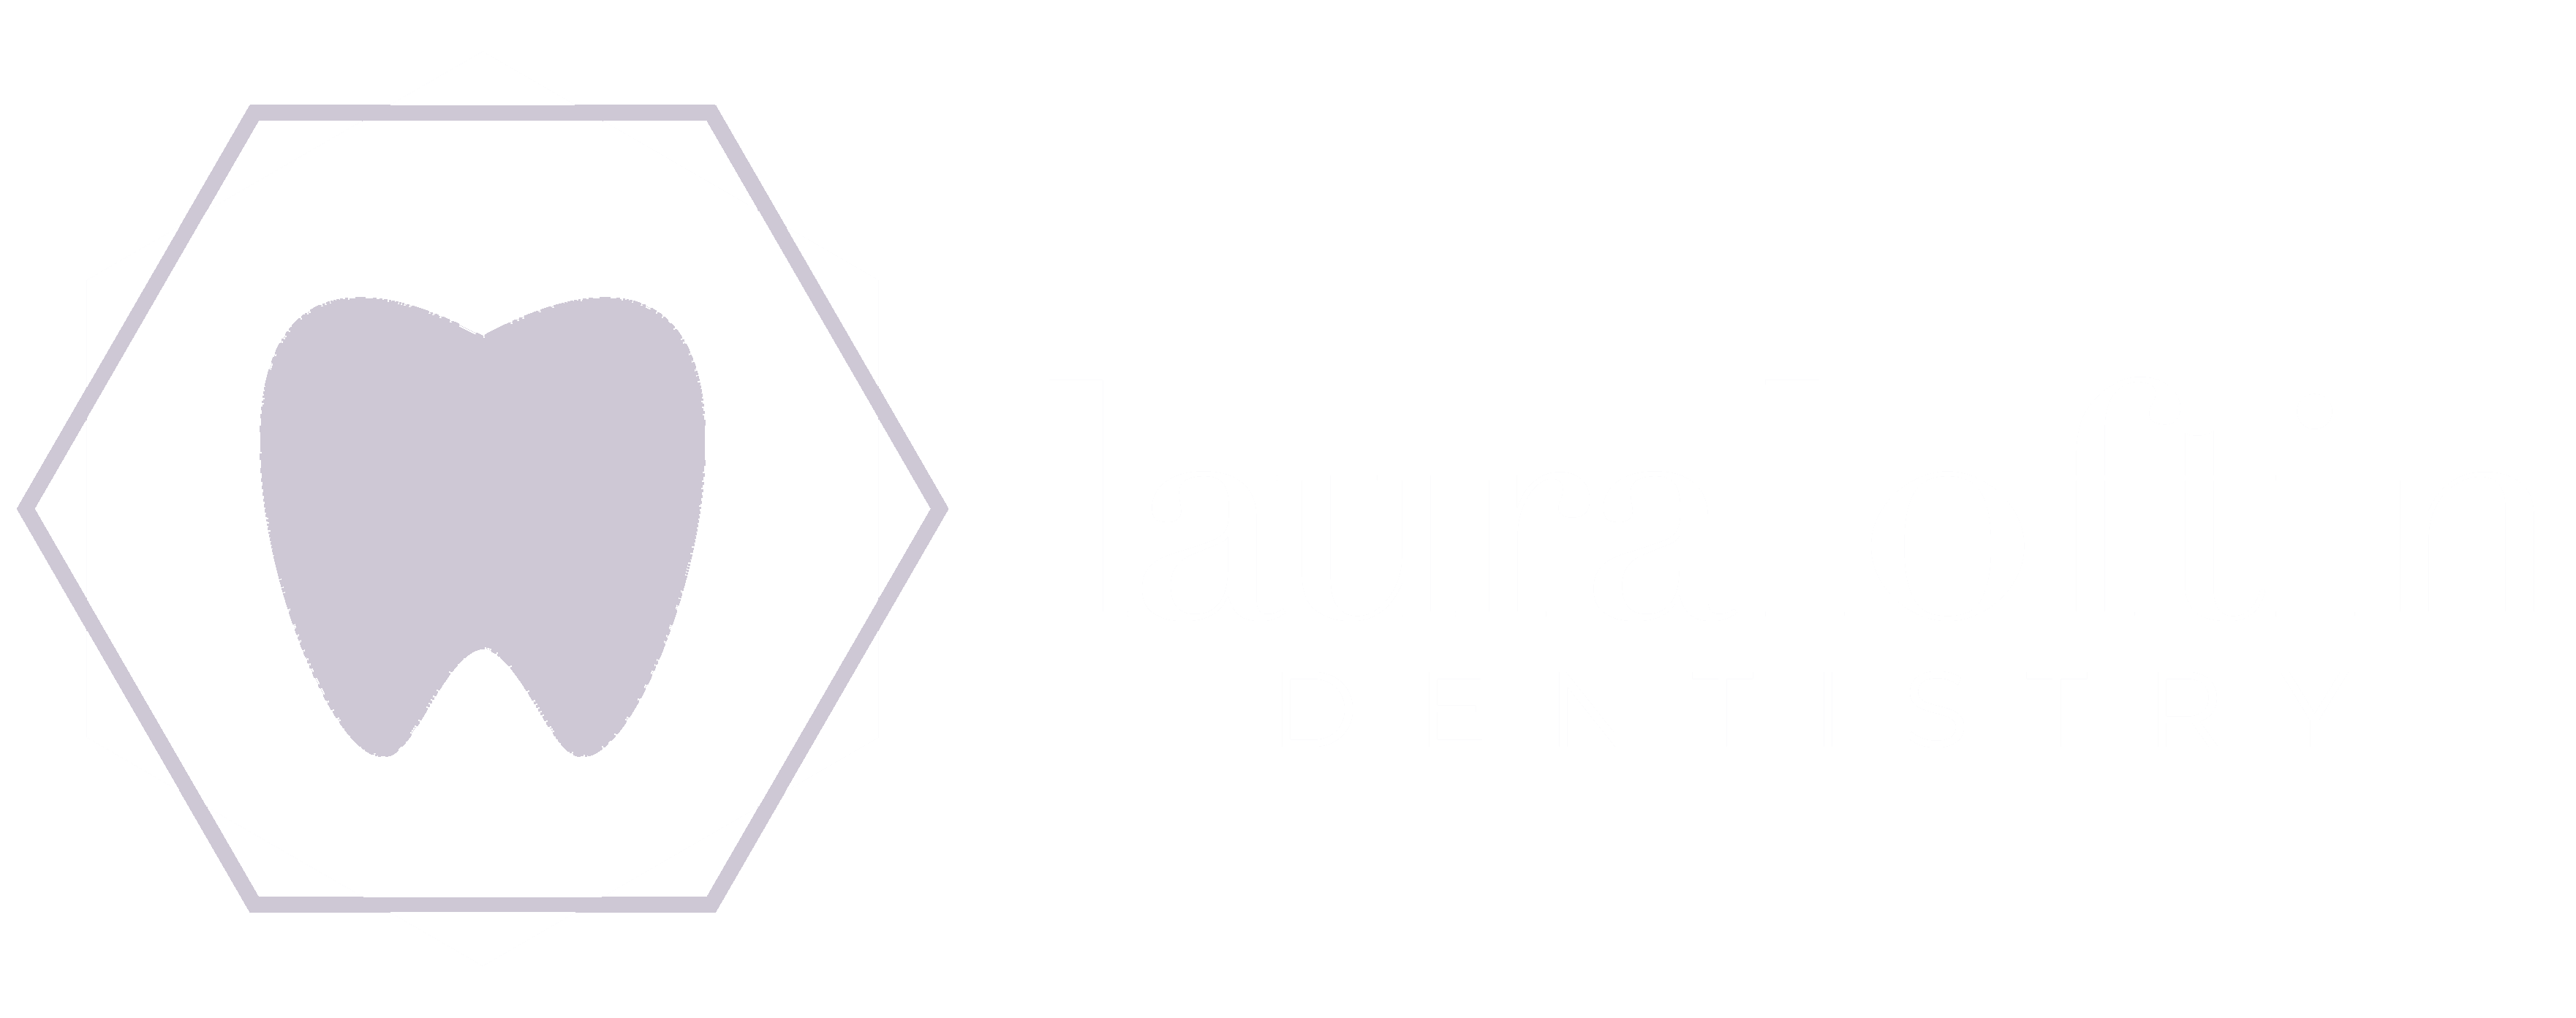 laura loftin logo white